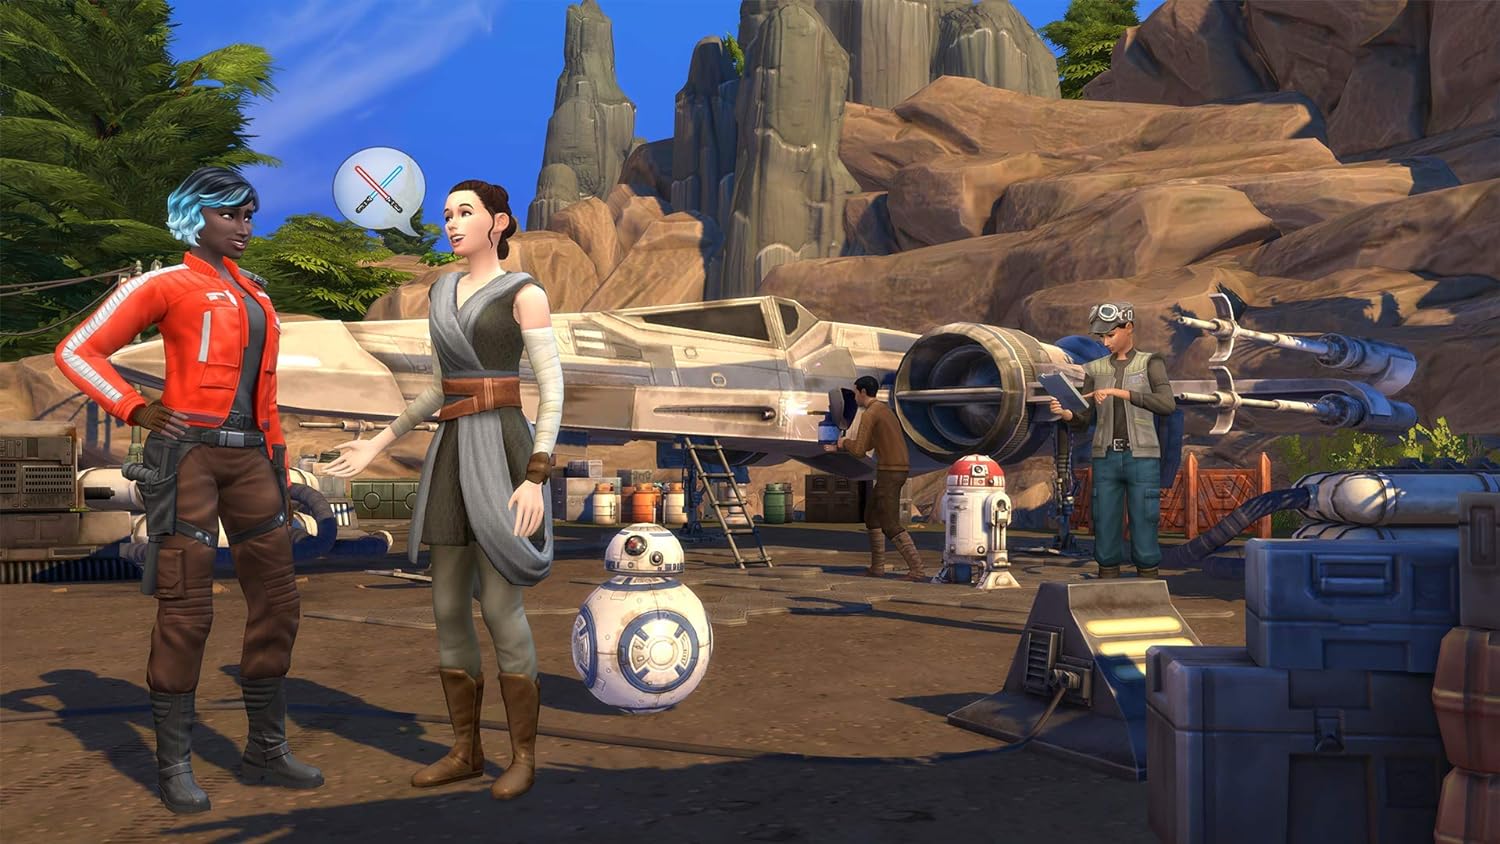 The Sims 4 & Star Wars Journey to Batuu Bundle (Xbox One)